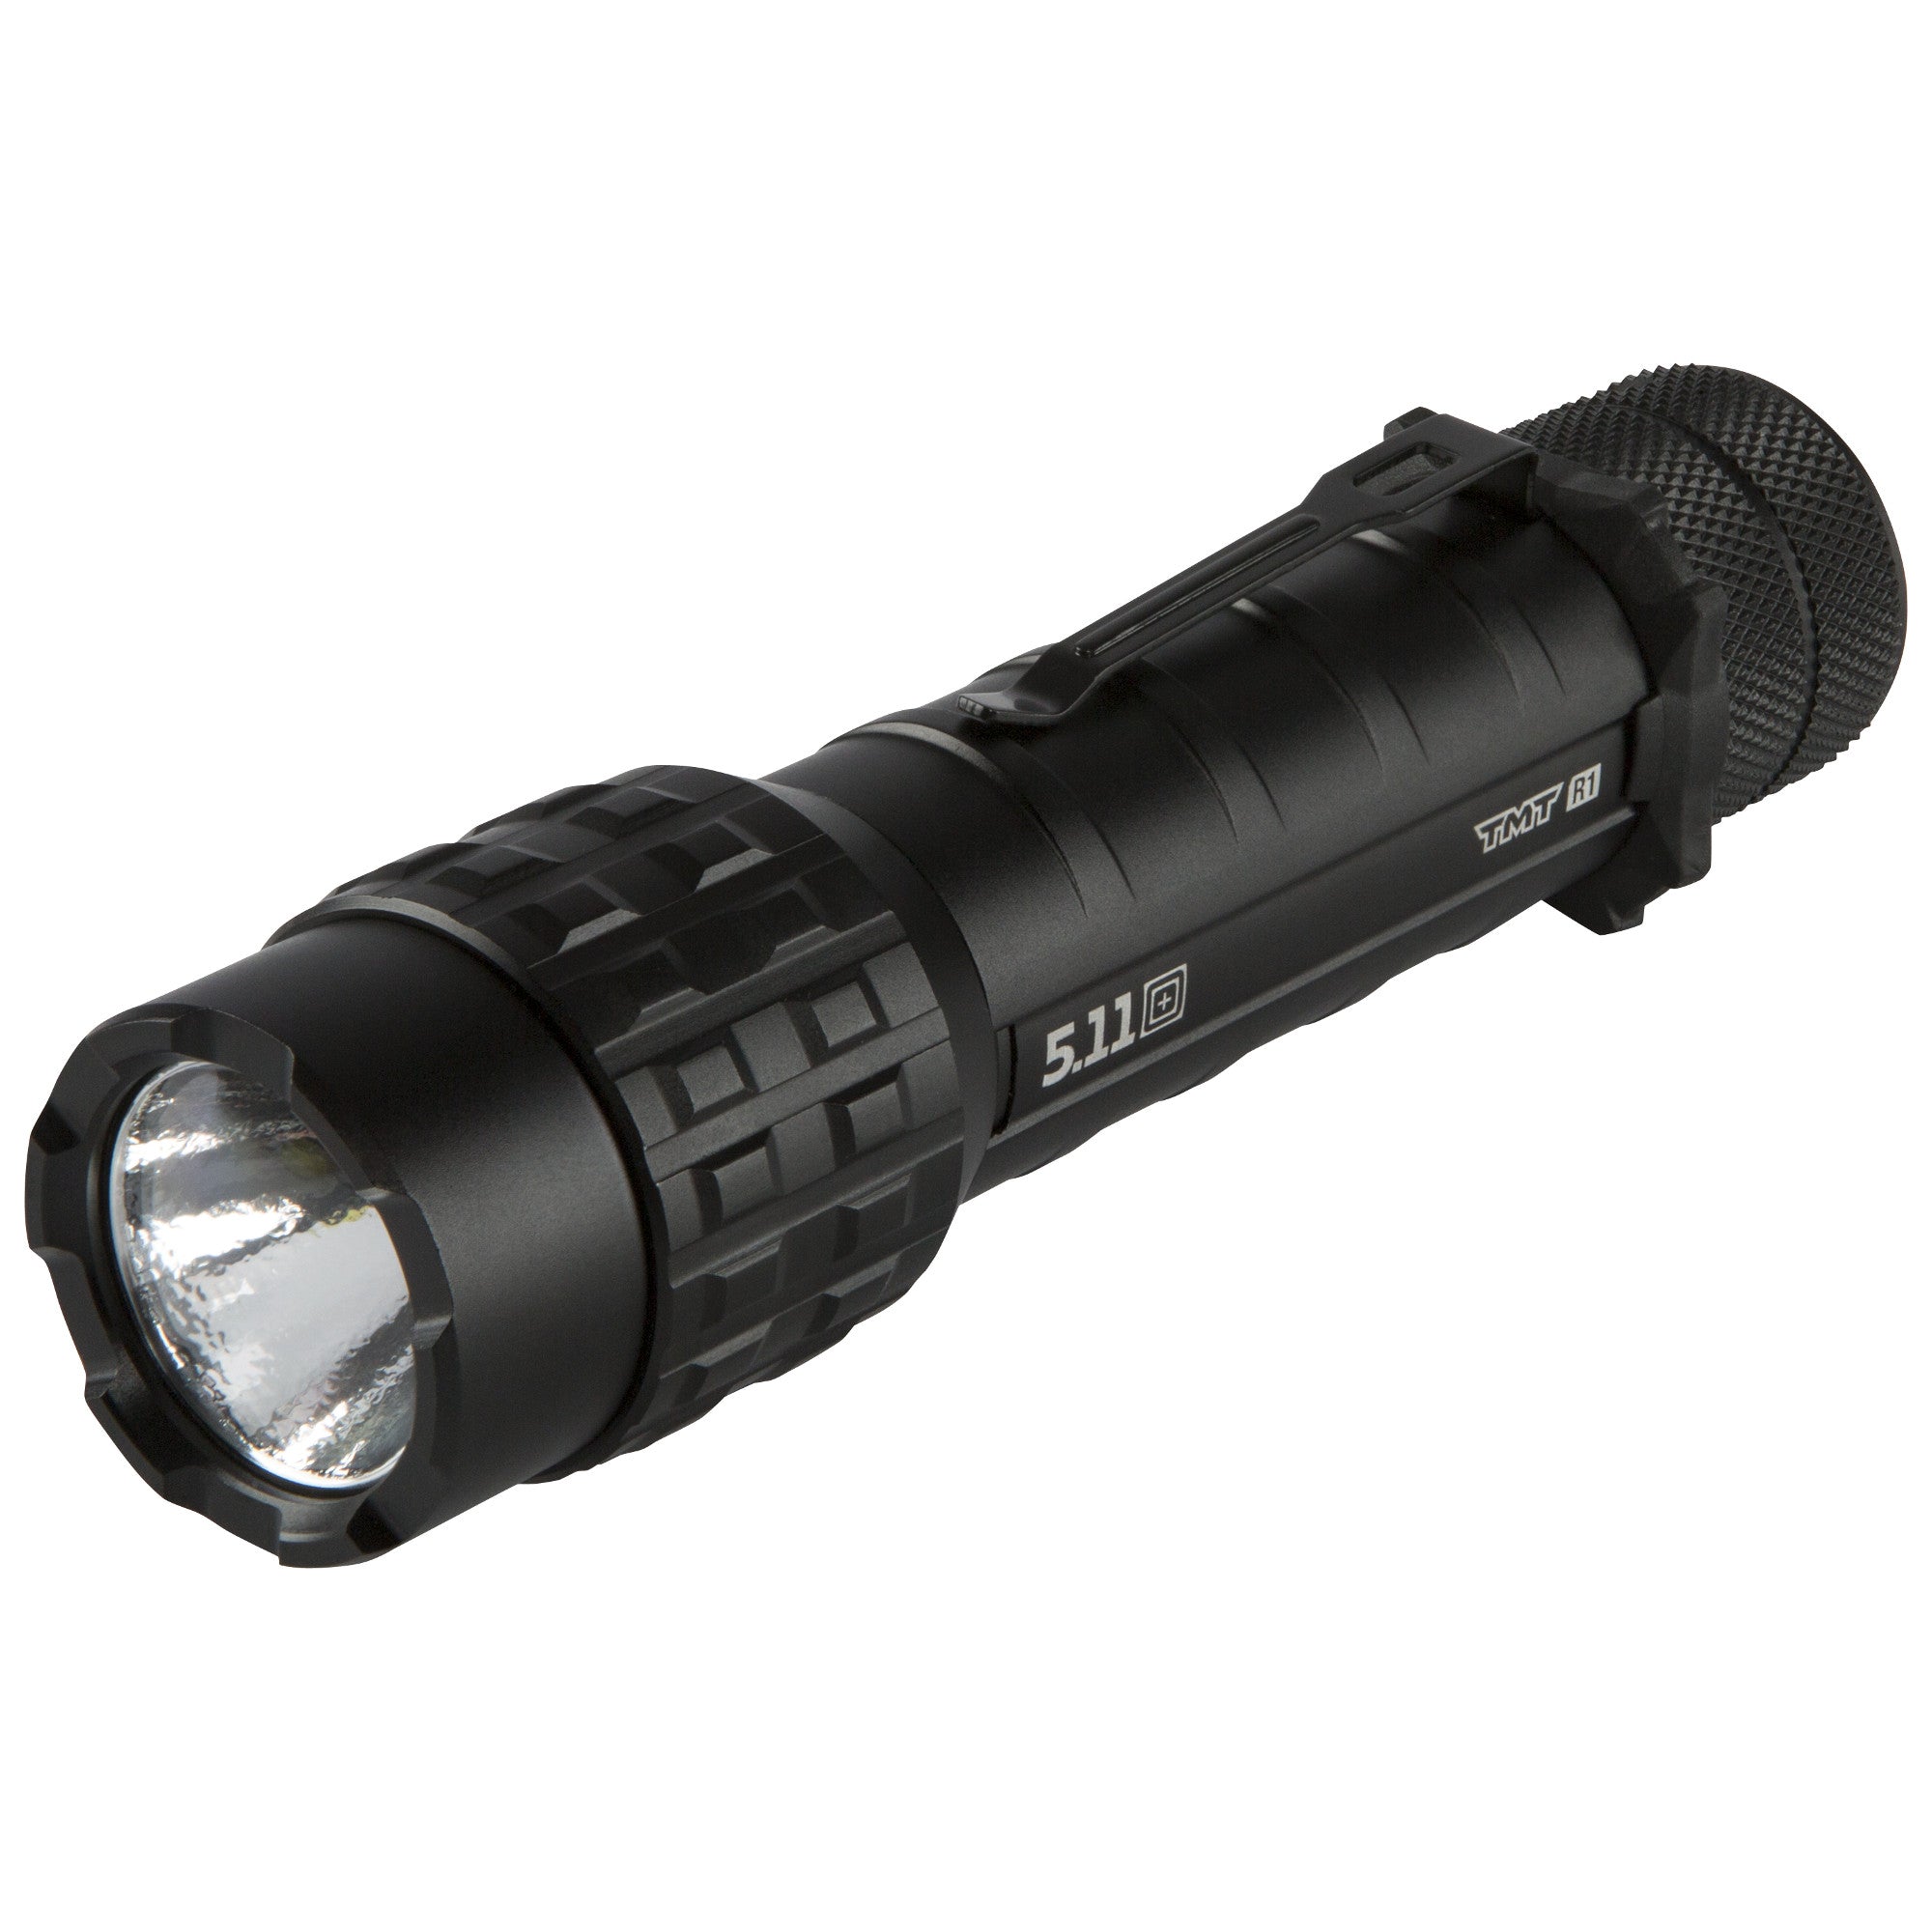 5.11 Tactical TMT R1 339-Lumens Duty Flashlight